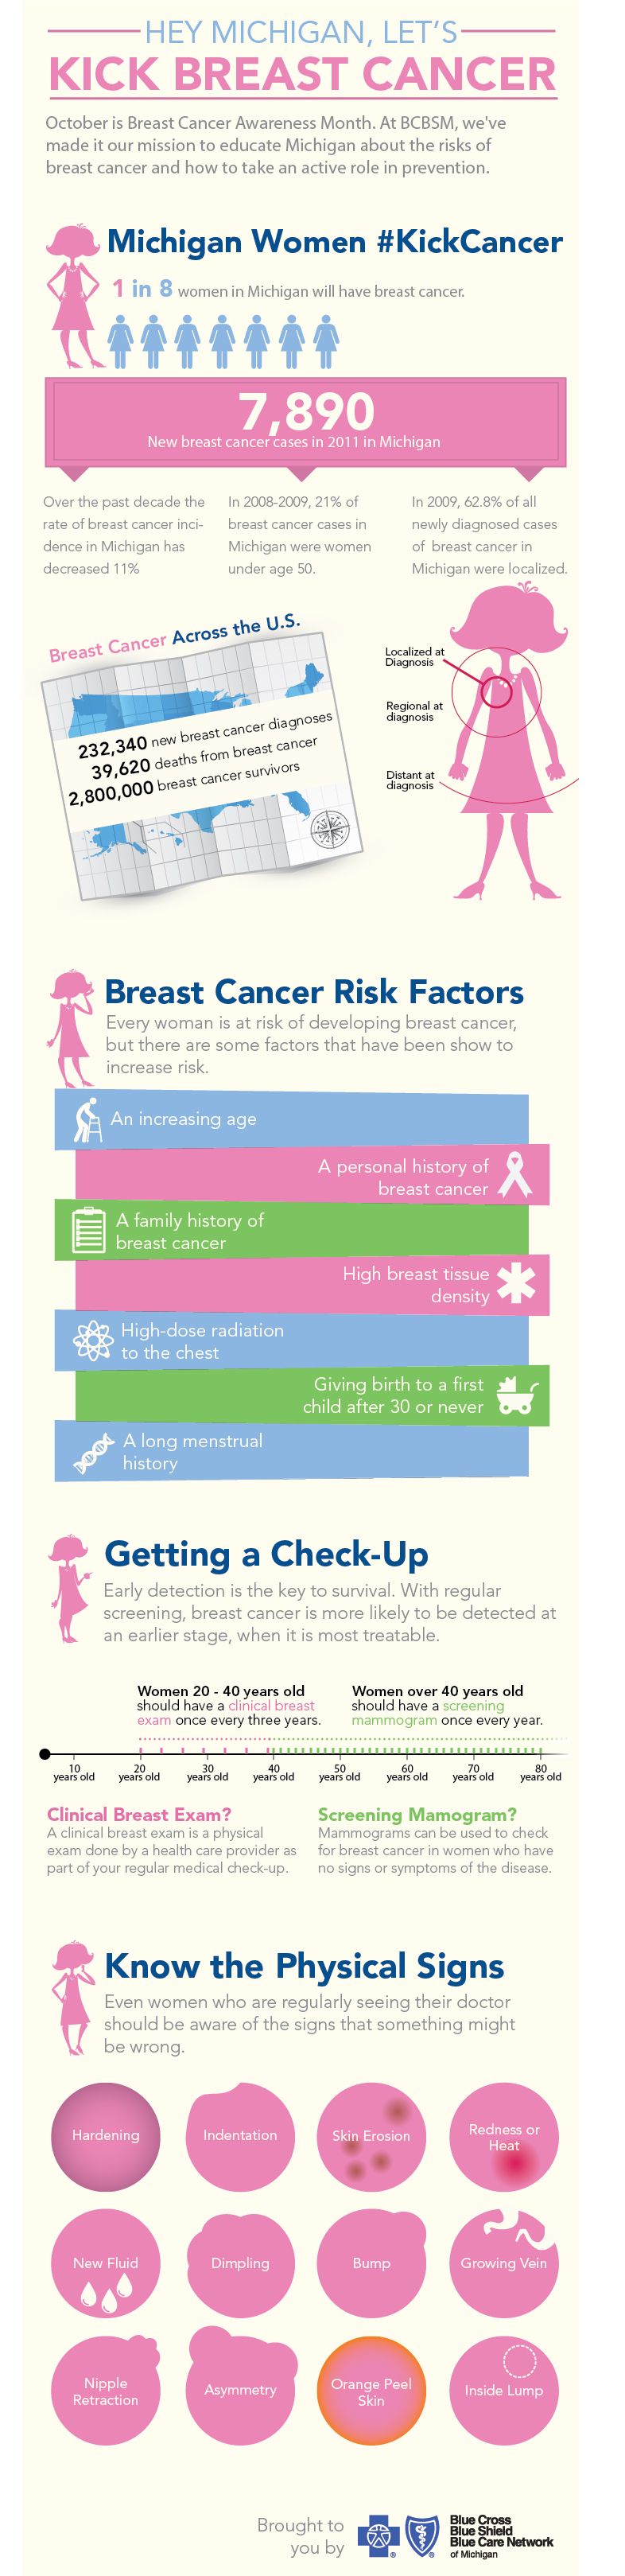 9. Breast cancer risk factors